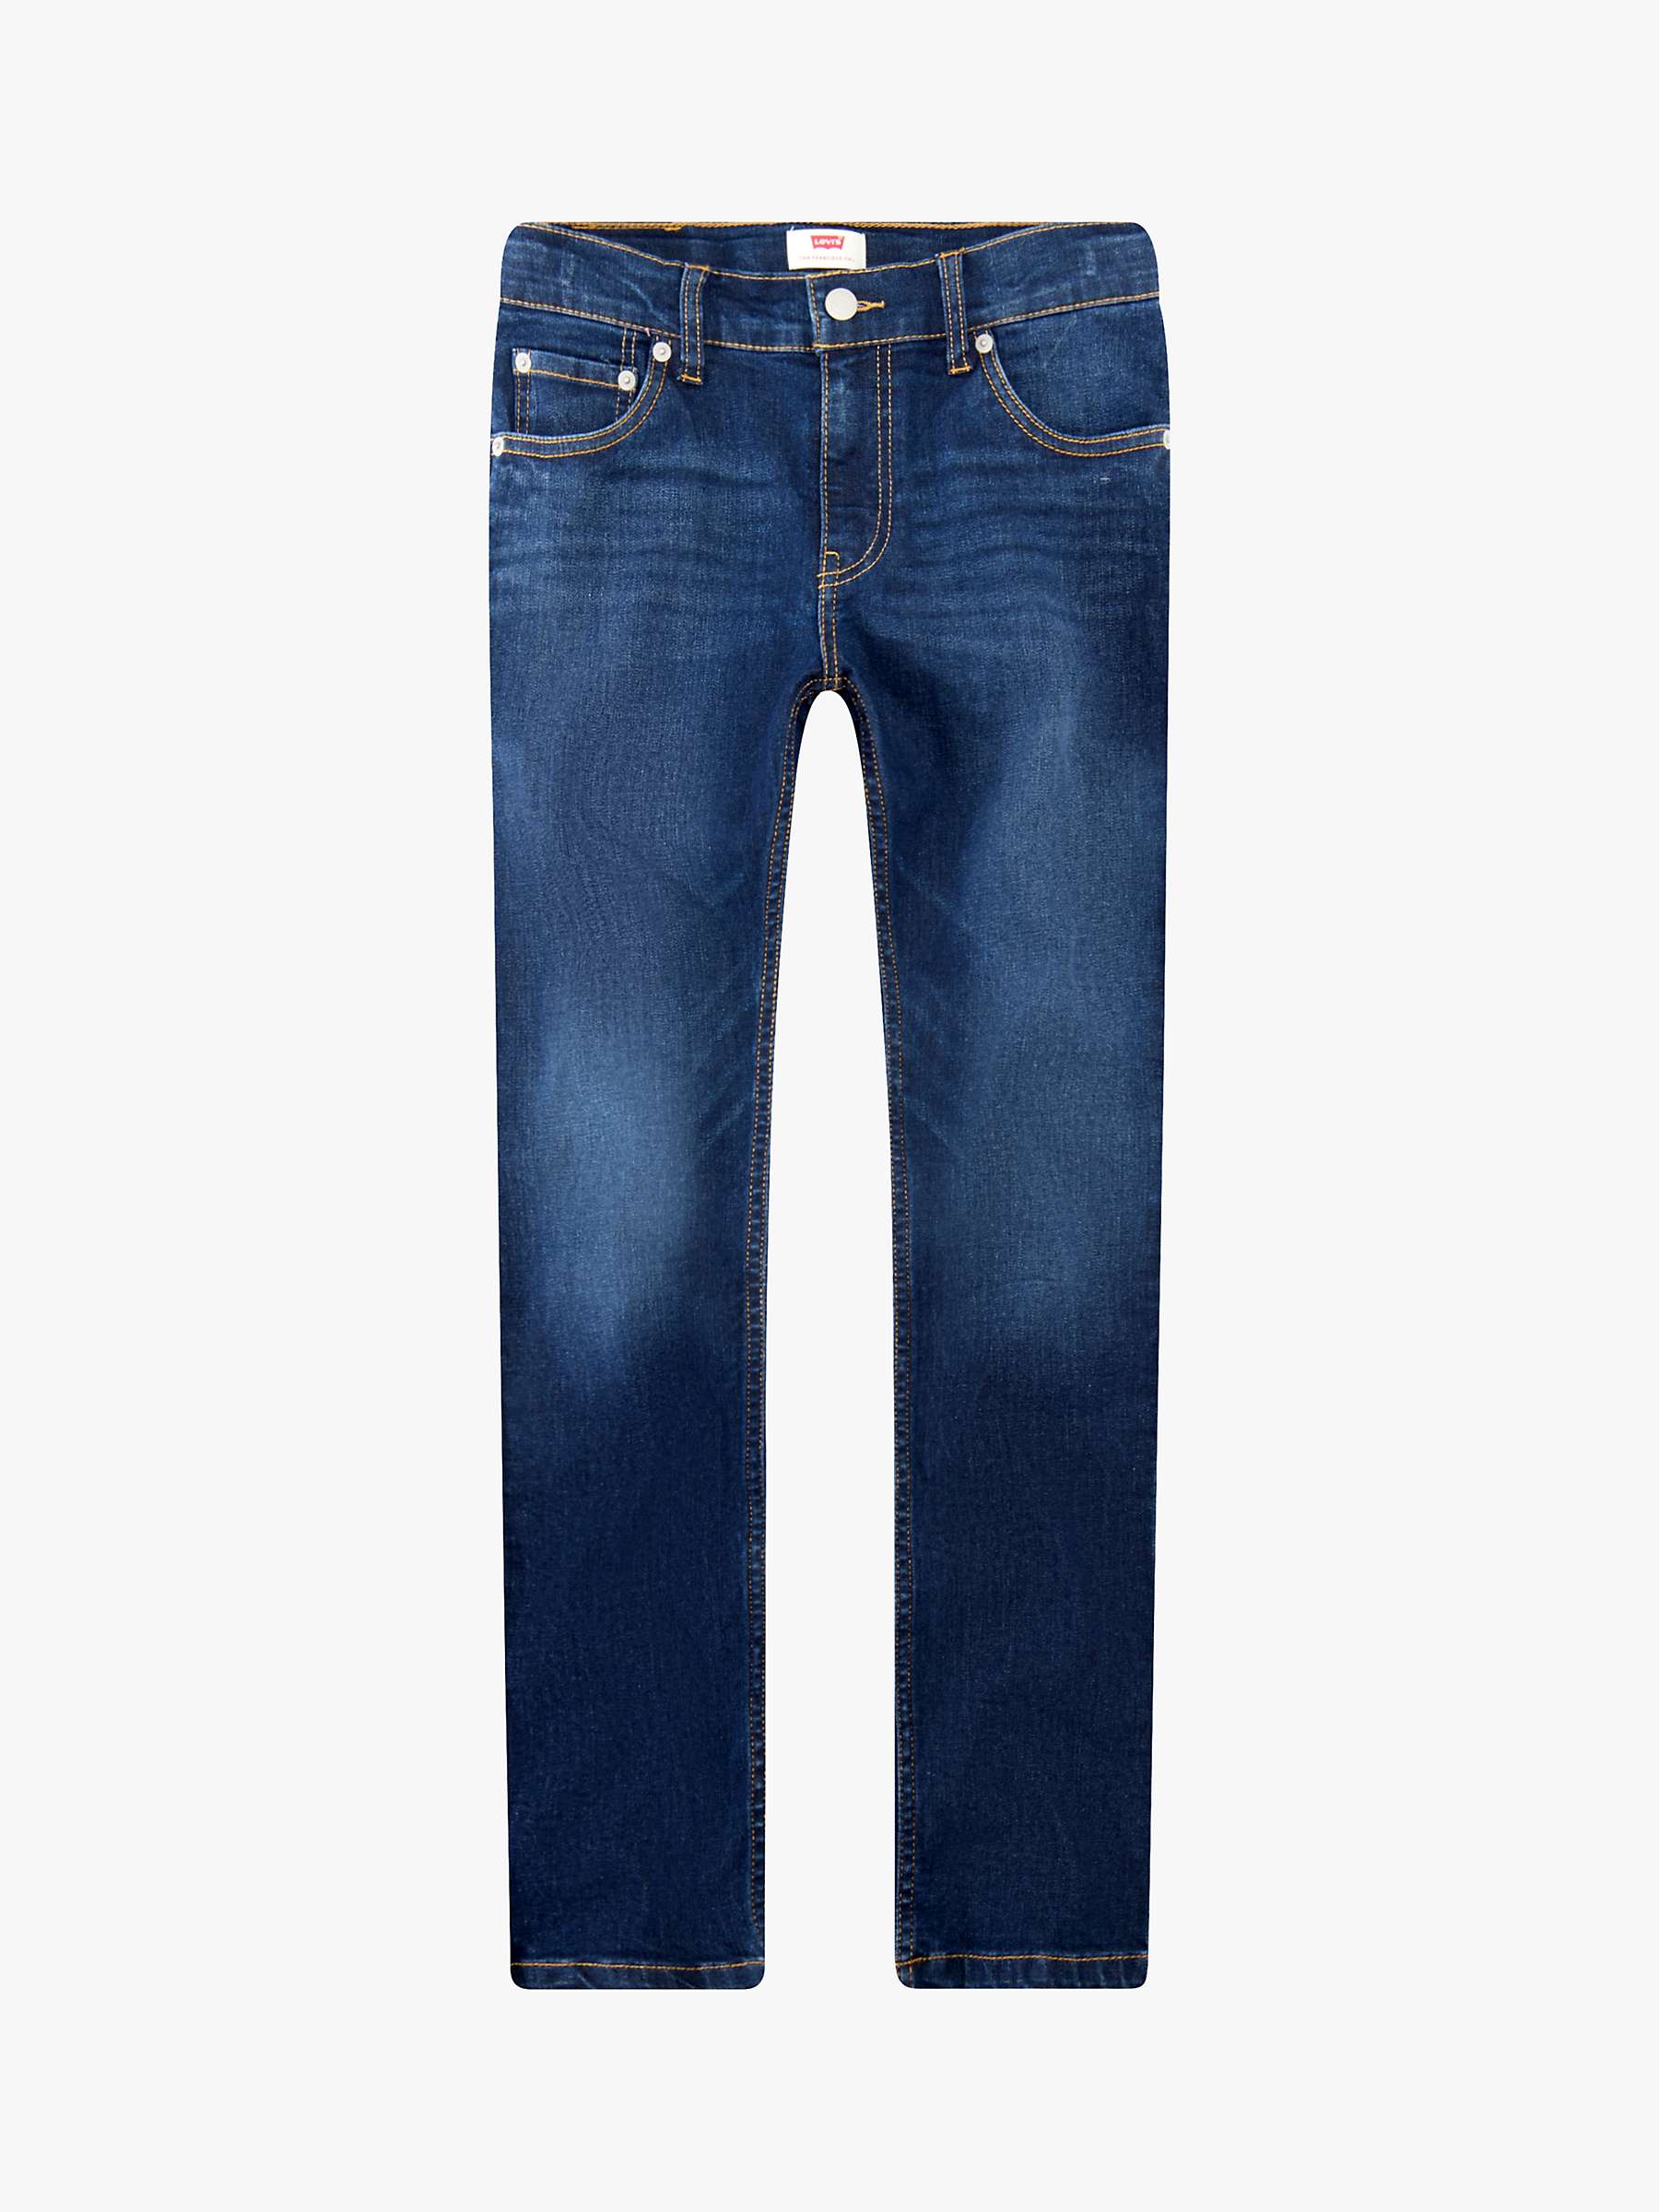 Buy Levi's Boys' 510 Skinny Fit Jeans, Dark Blue Online at johnlewis.com